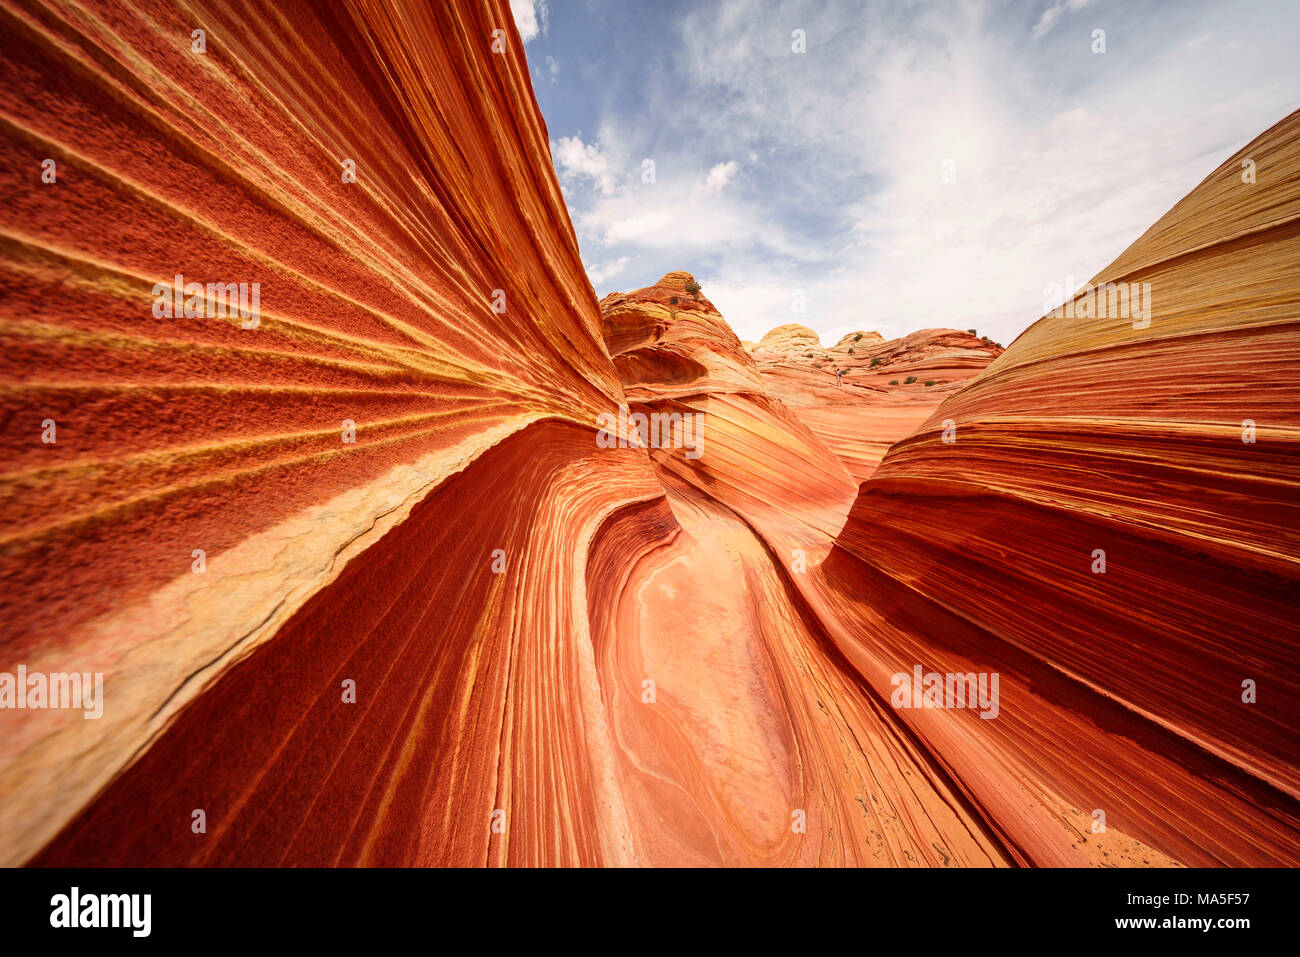 Die Wave, Coyote Buttes North, Paria Canyon-Vermillion Cliffs Wilderness, Colorado Plateau, Arizona, USA Stockfoto